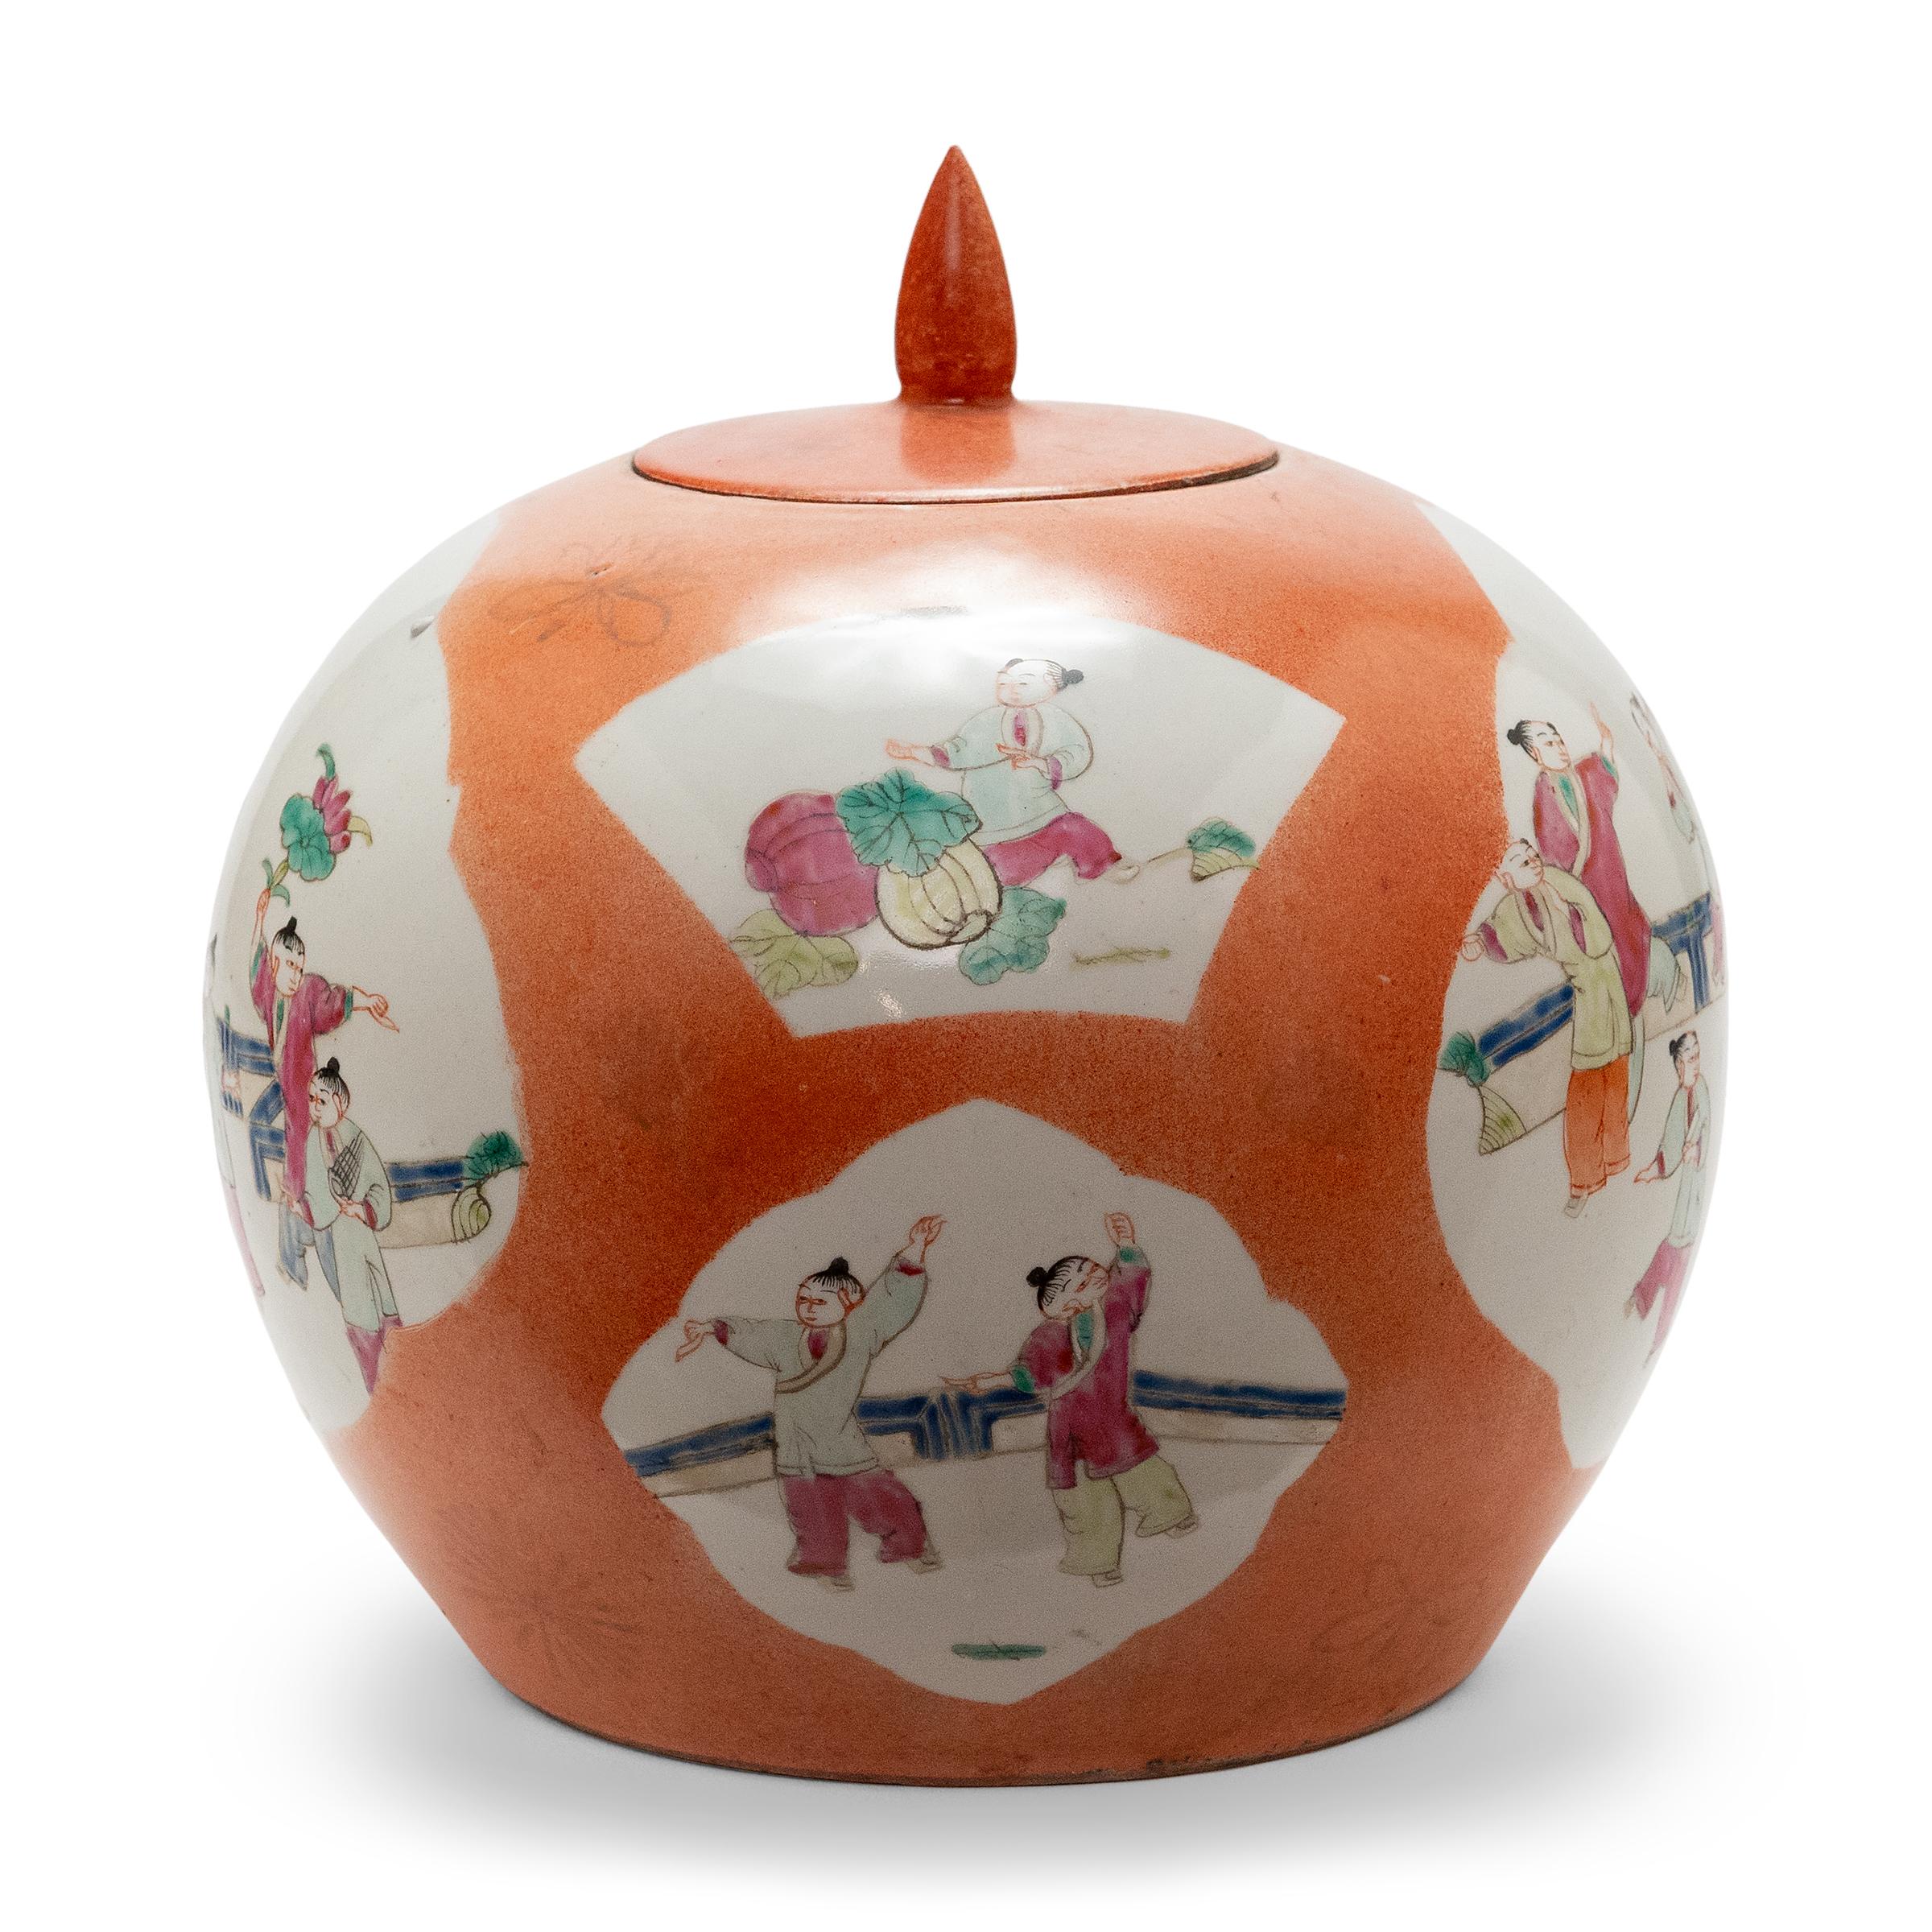 Glazed Round Chinese Persimmon Orange Jar, c. 1900